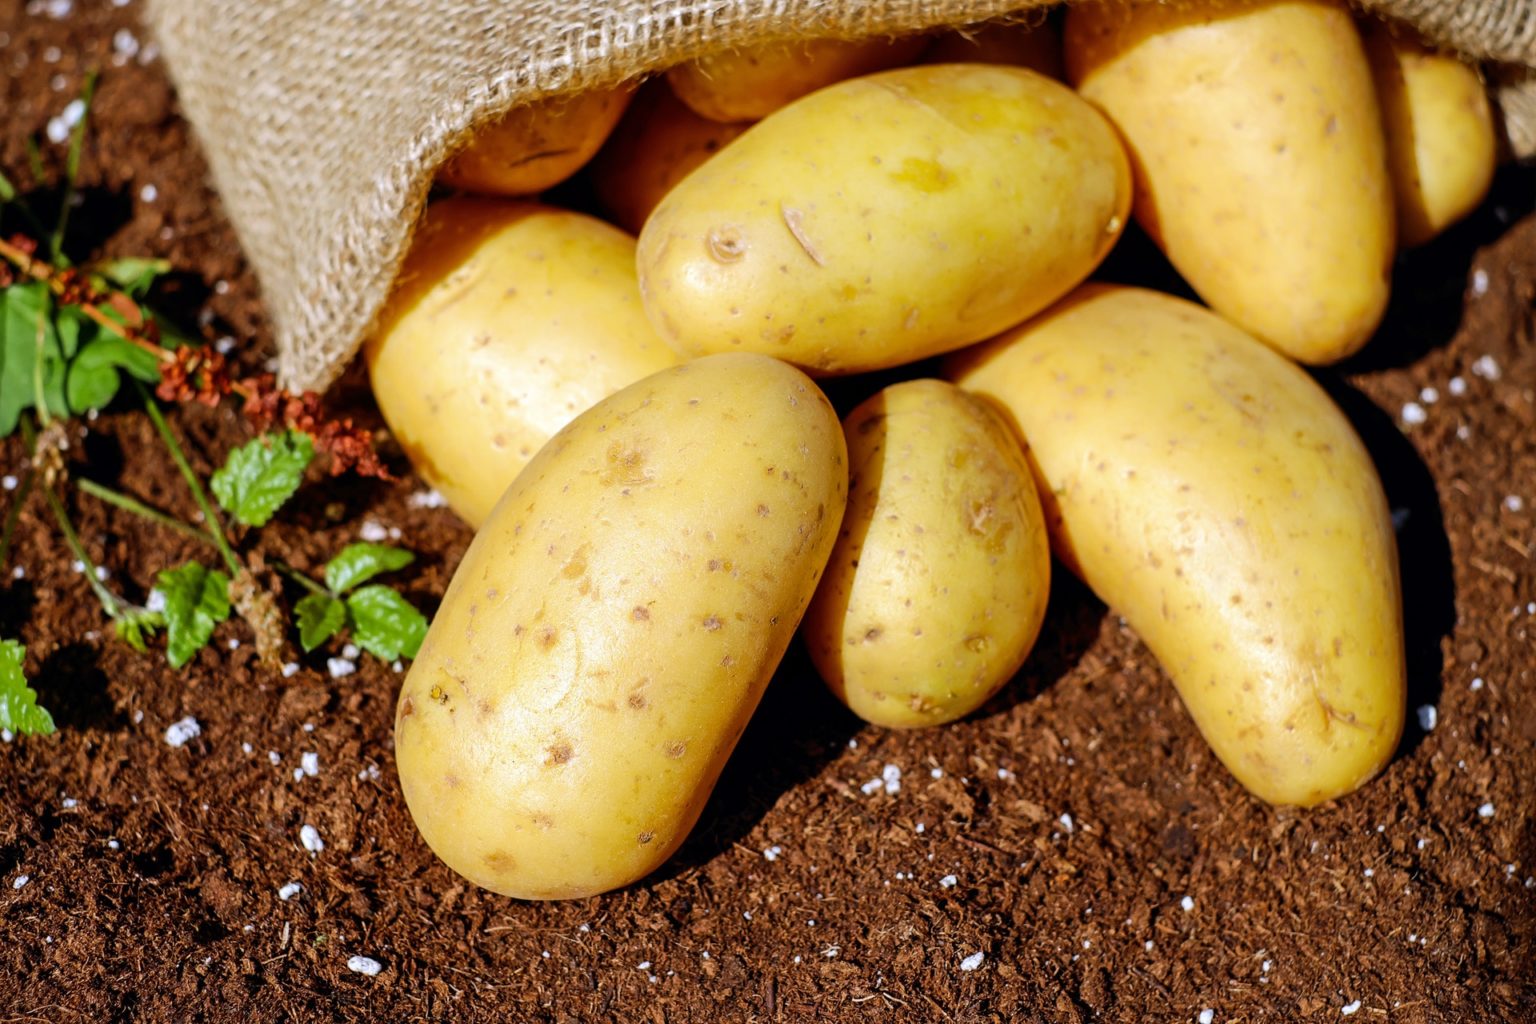 500 тенге за килограмм. Кто виноват в дефиците картофеля в Казахстане?